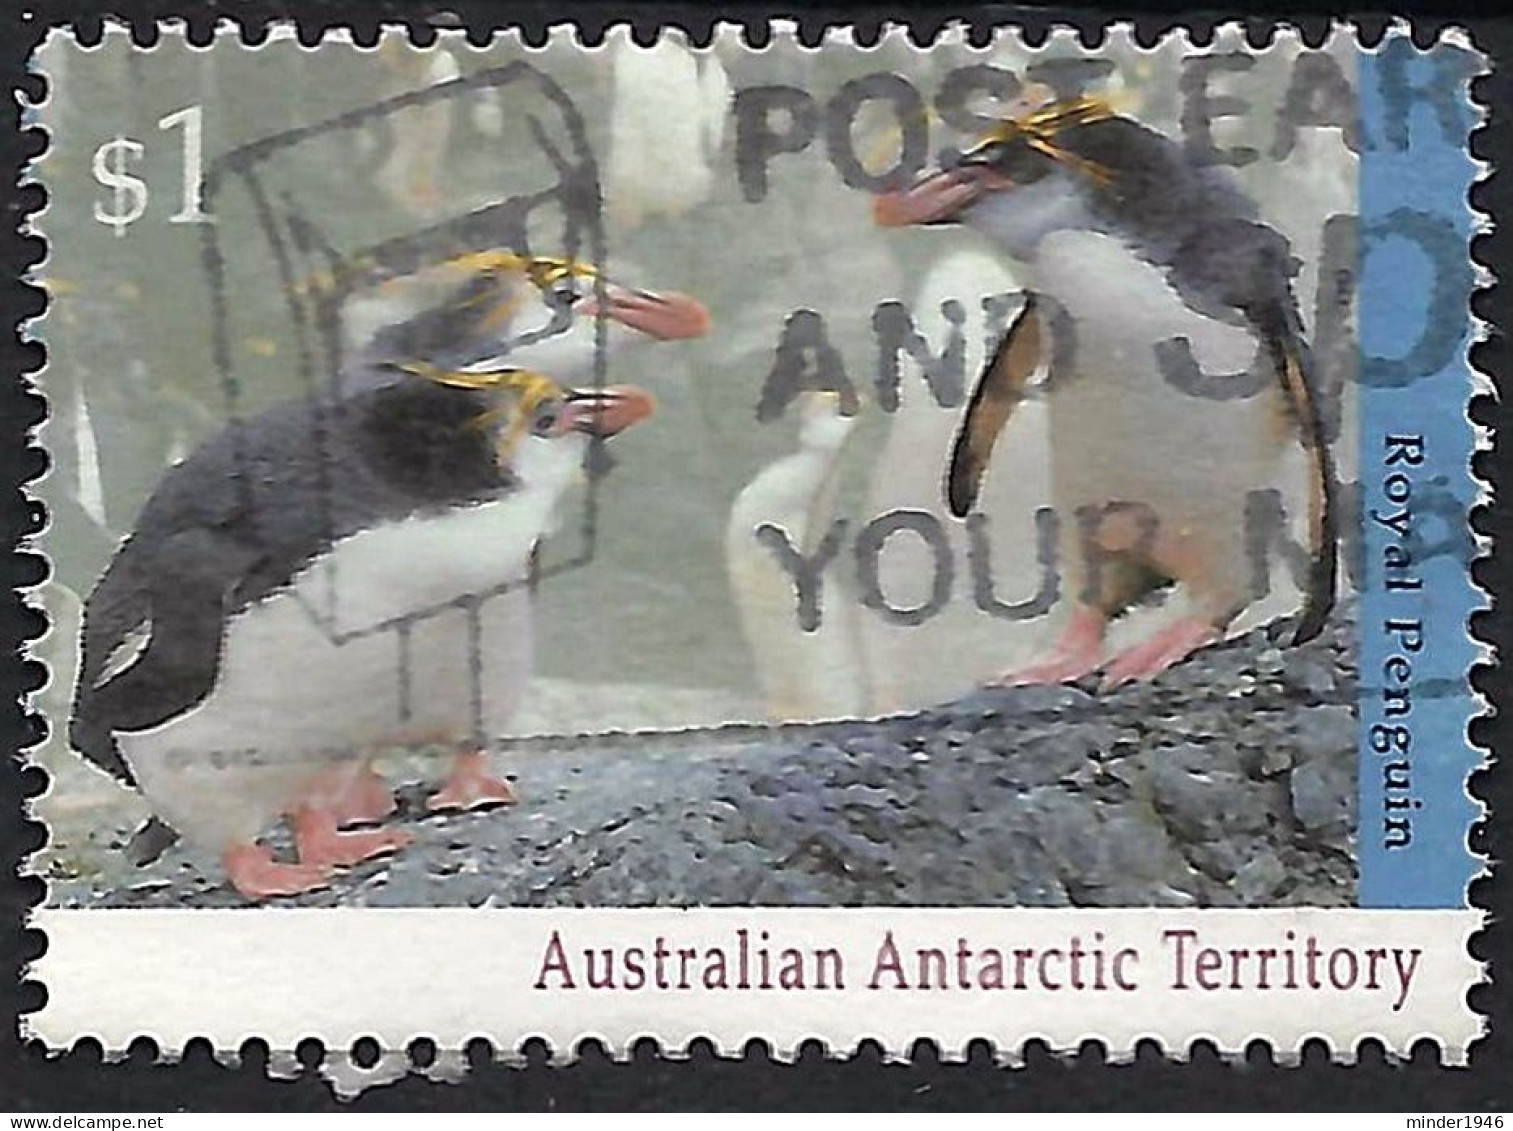 AUSTRALIAN ANTARCTIC TERRITORY (AAT) 1992 QEII $1 Multicoloured, Wildlife-Royal Penguin SG94 Used - Used Stamps